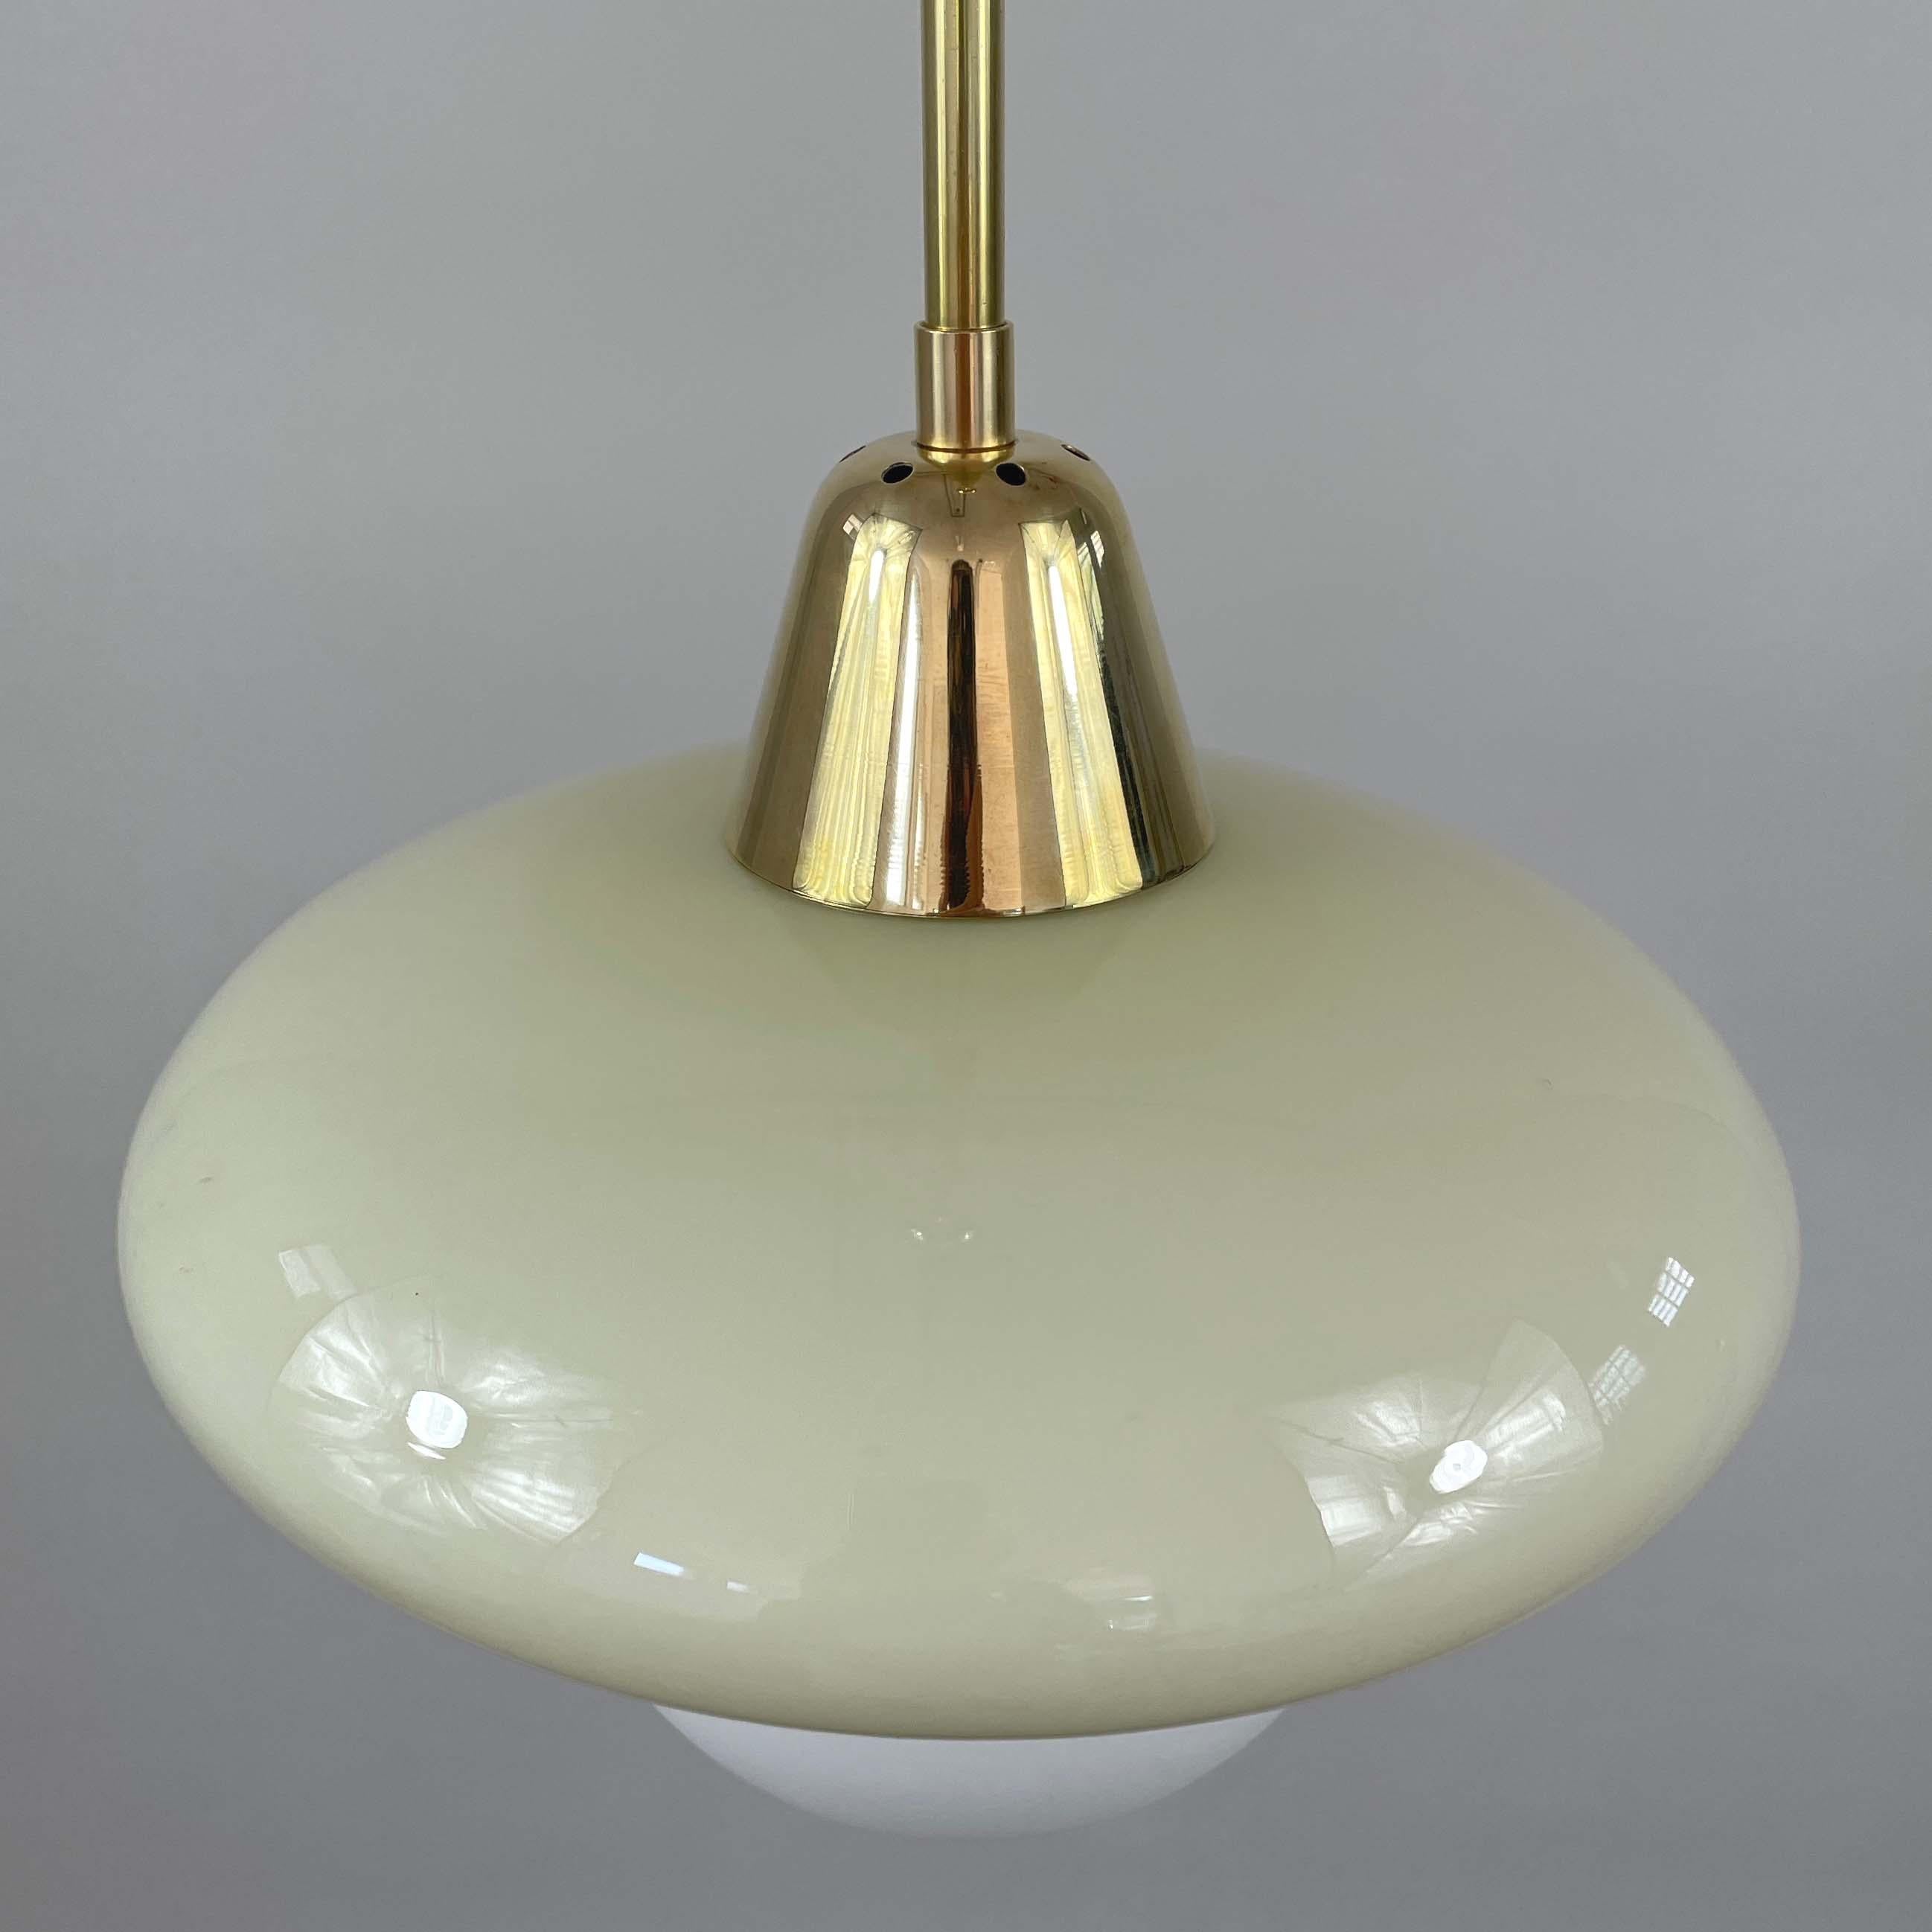 Art Deco Bauhaus Cream Opaline Glass and Brass Pendants, Germany 1930s For Sale 4